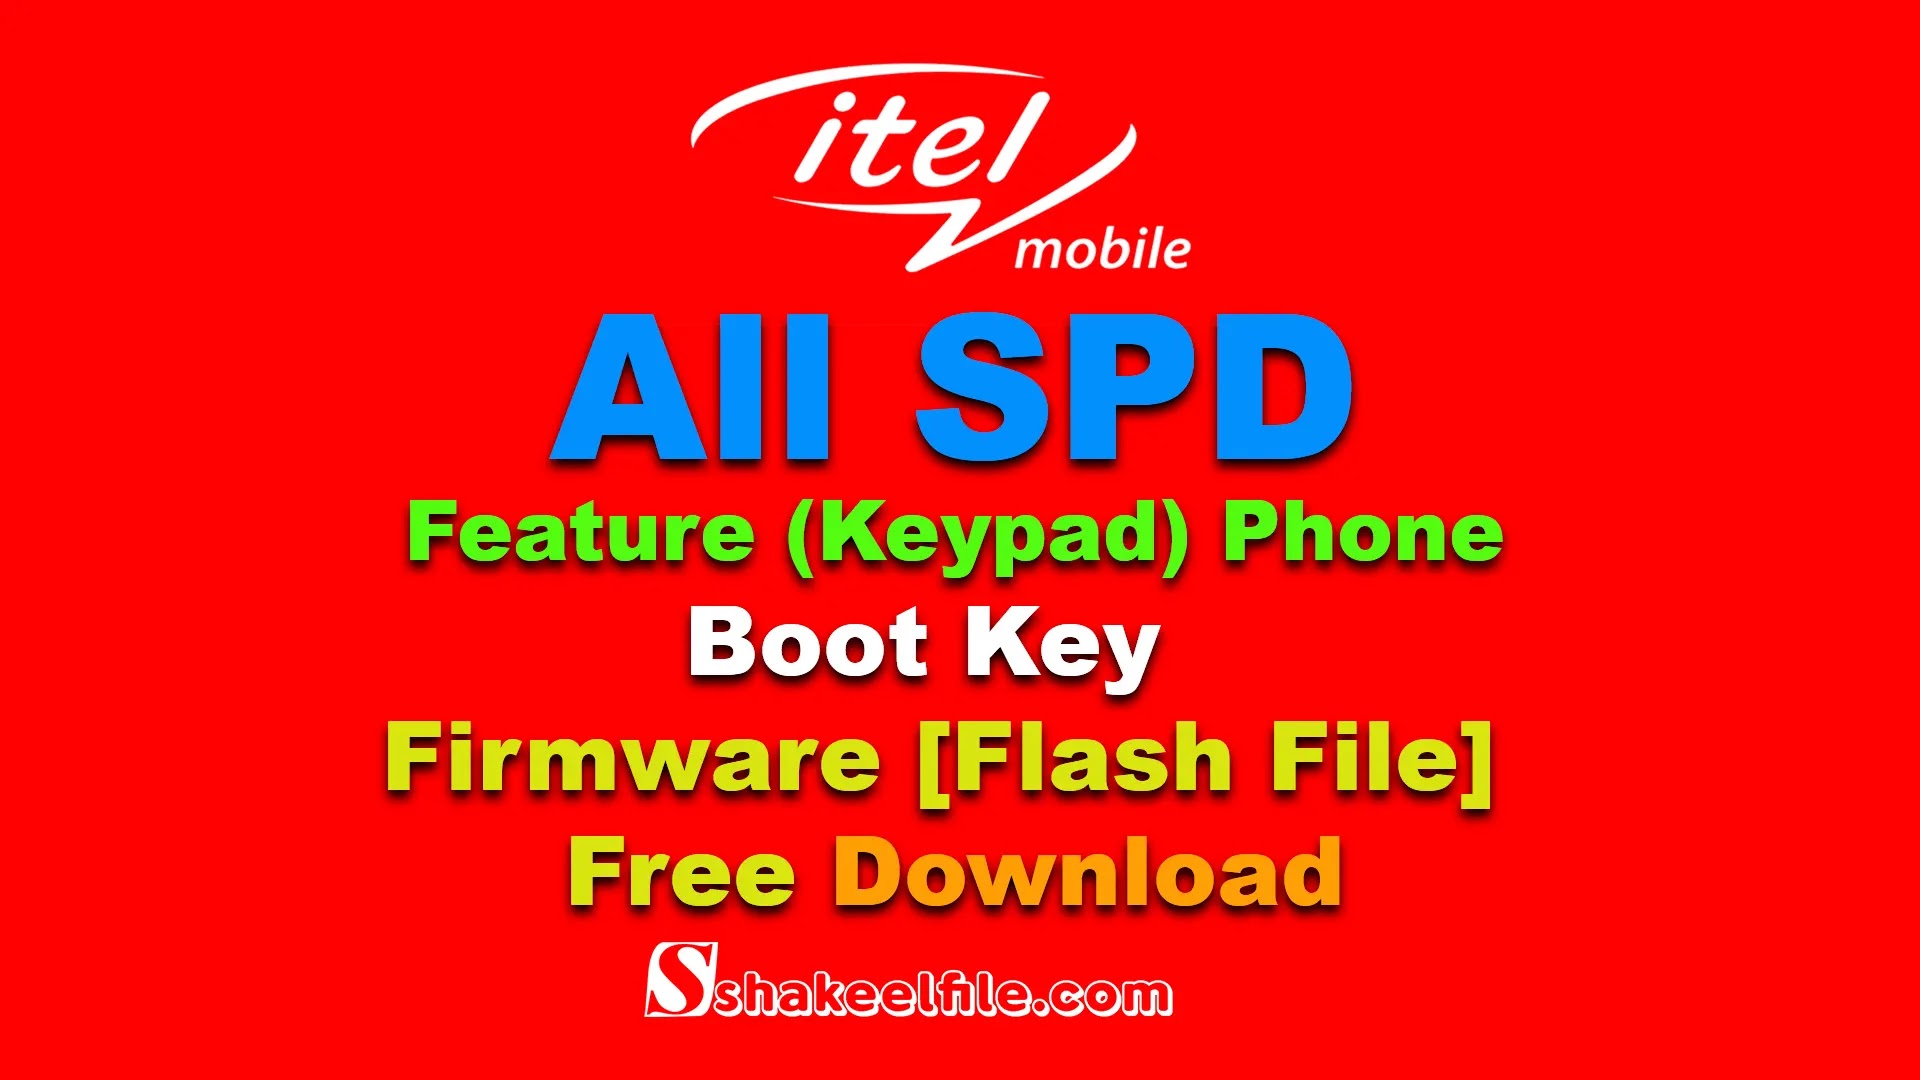 itel-ALL-SPD-Feature-Keypad-Phone-Boot-Key-Firmware-Flash-File